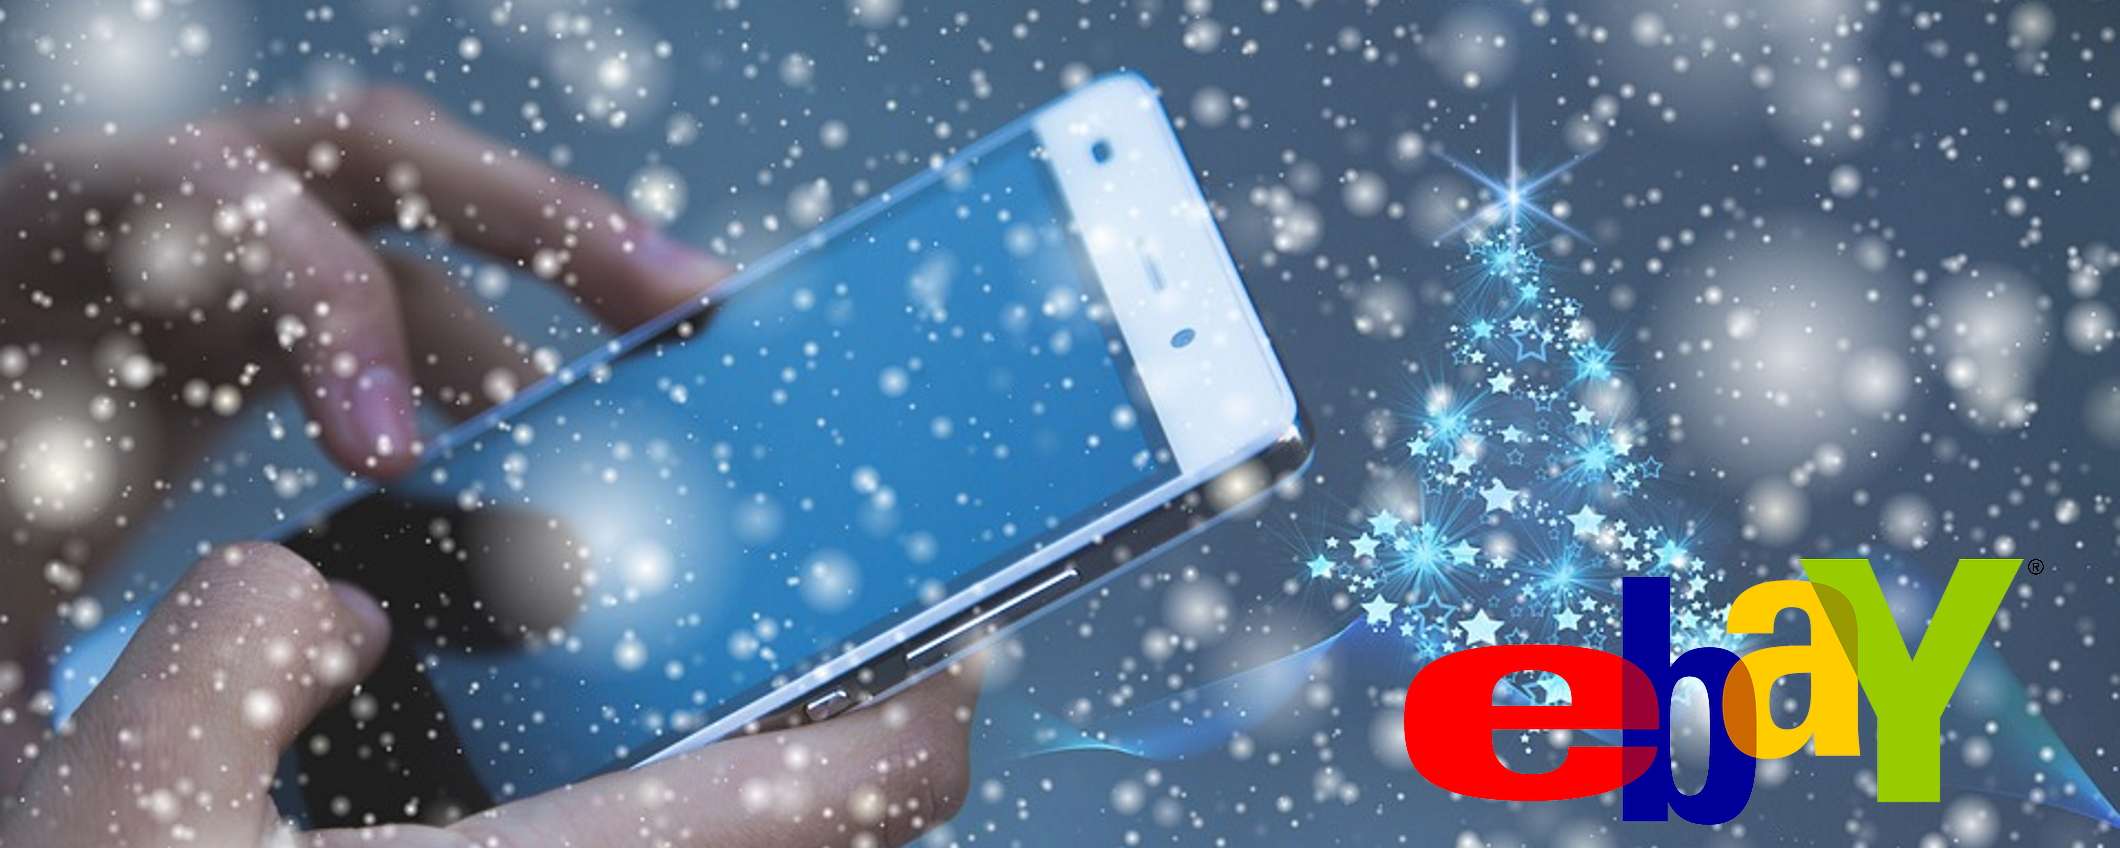 I migliori smartphone per Natale in offerta su eBay